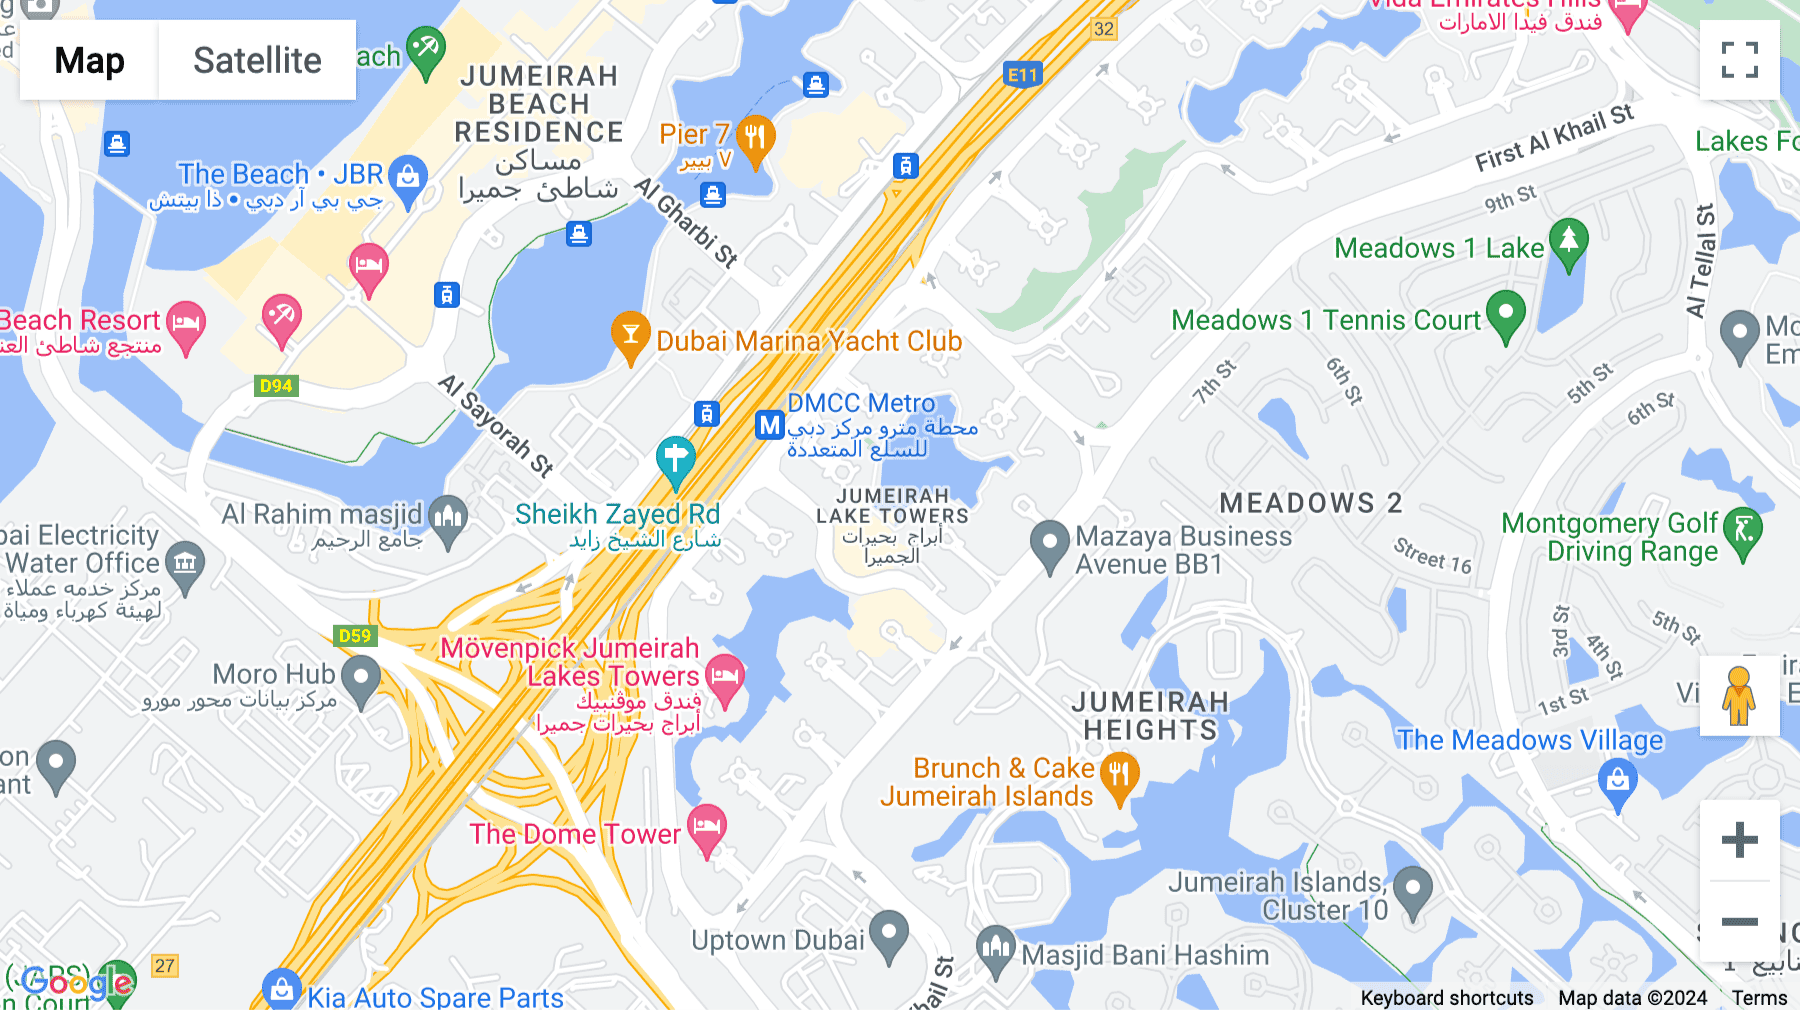 Click for interative map of One JLT, Jumeirah Lakes Towers, Dubai, Dubai